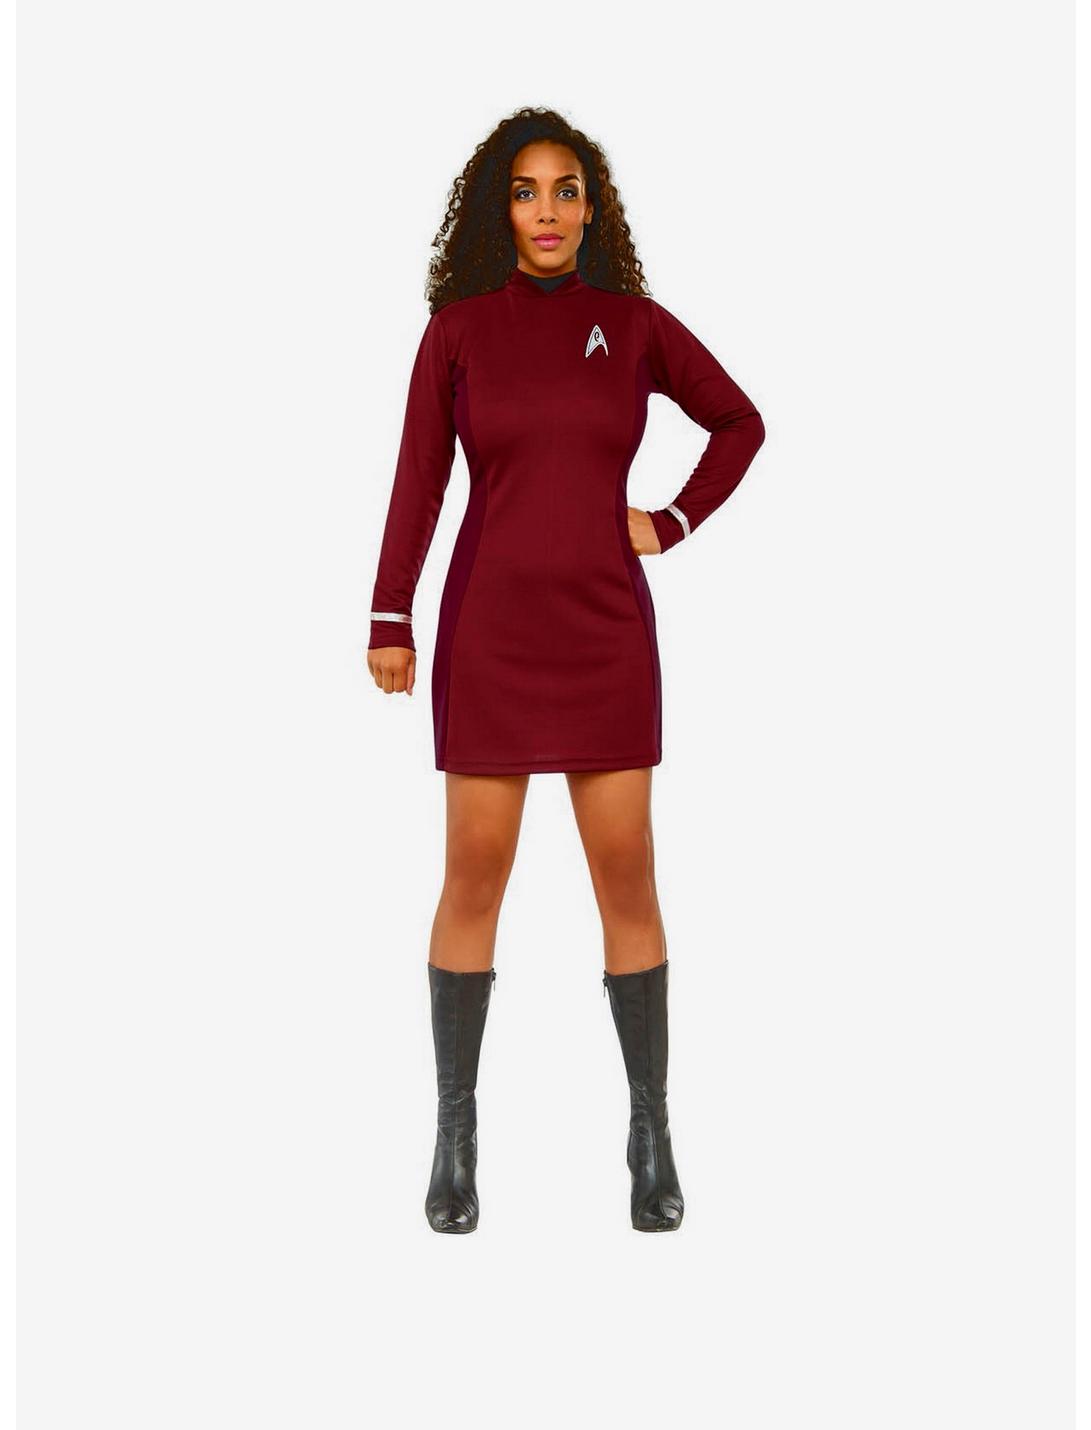 Star Trek 3 Uhura Costume, RED, hi-res